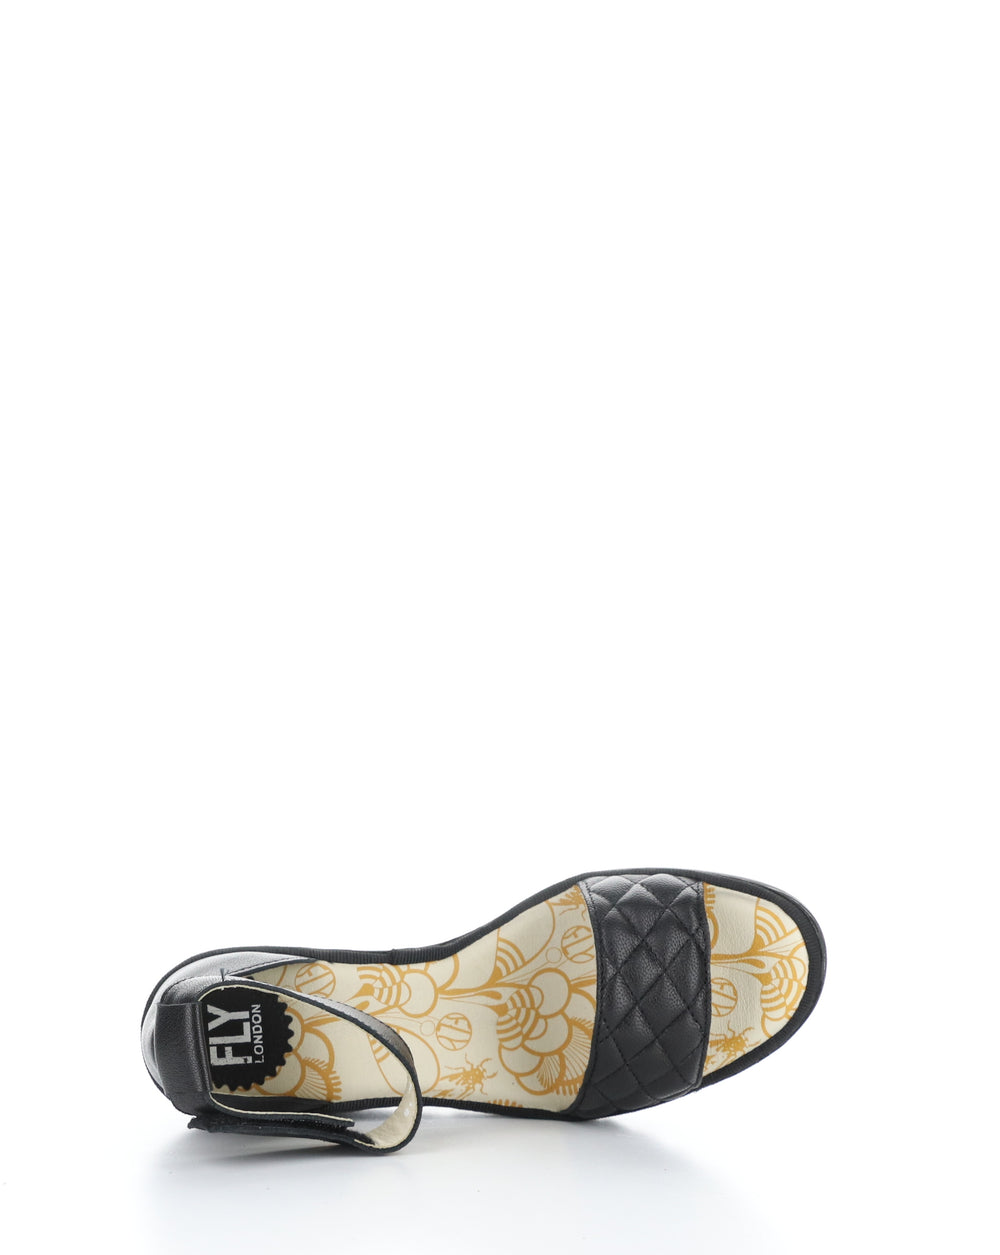 YARU471FLY BLACK Velcro Sandals